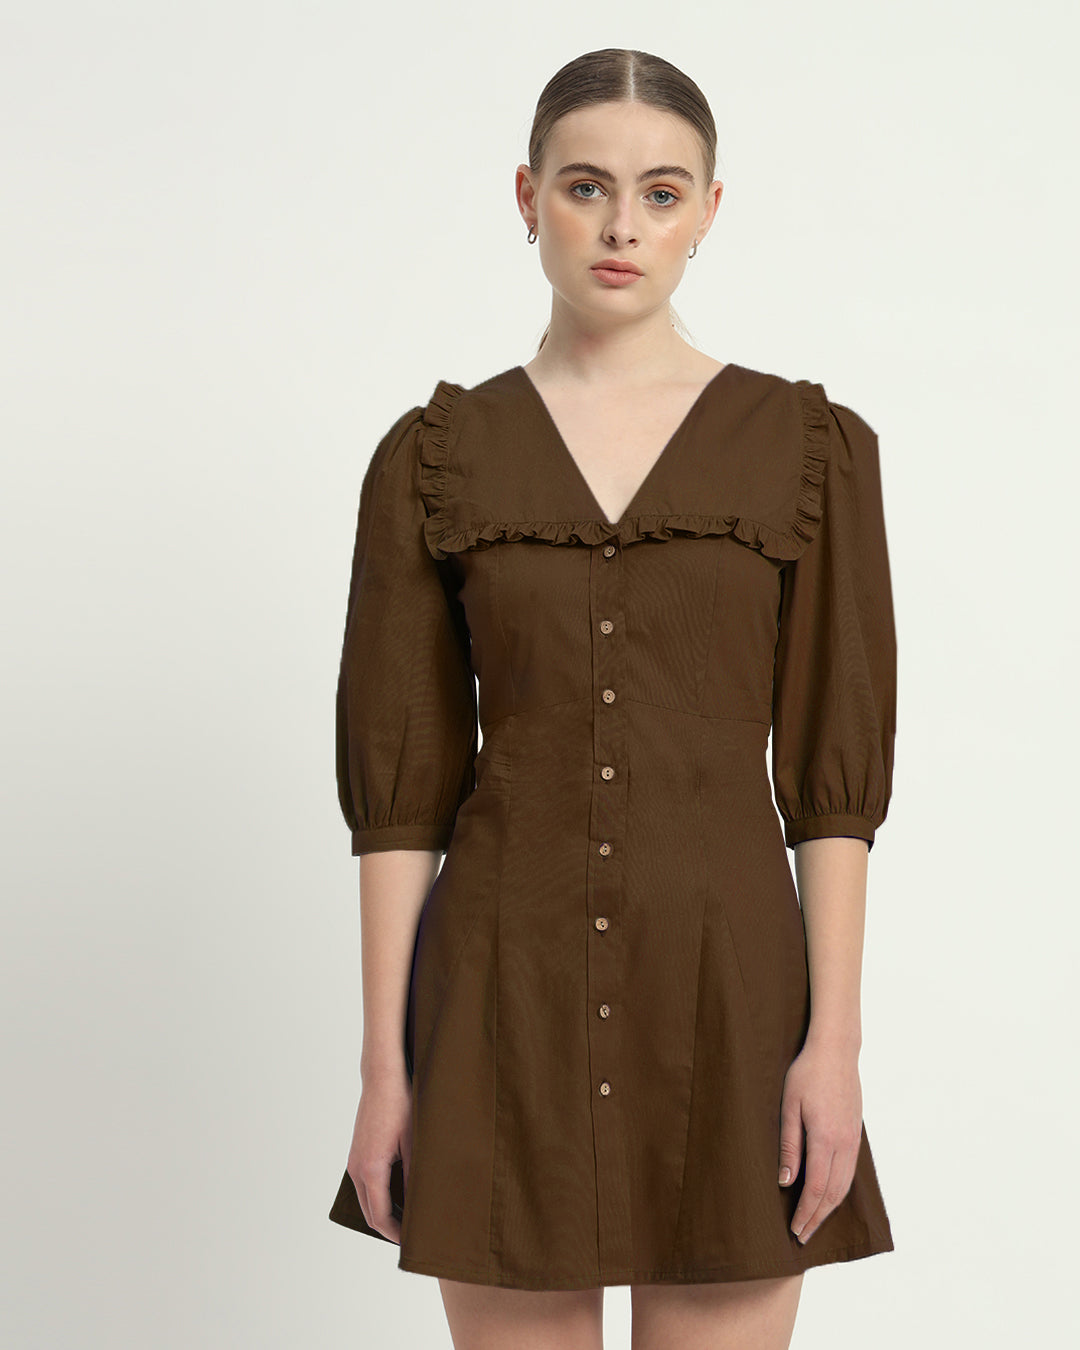 The Nutshell Isabela Cotton Dress